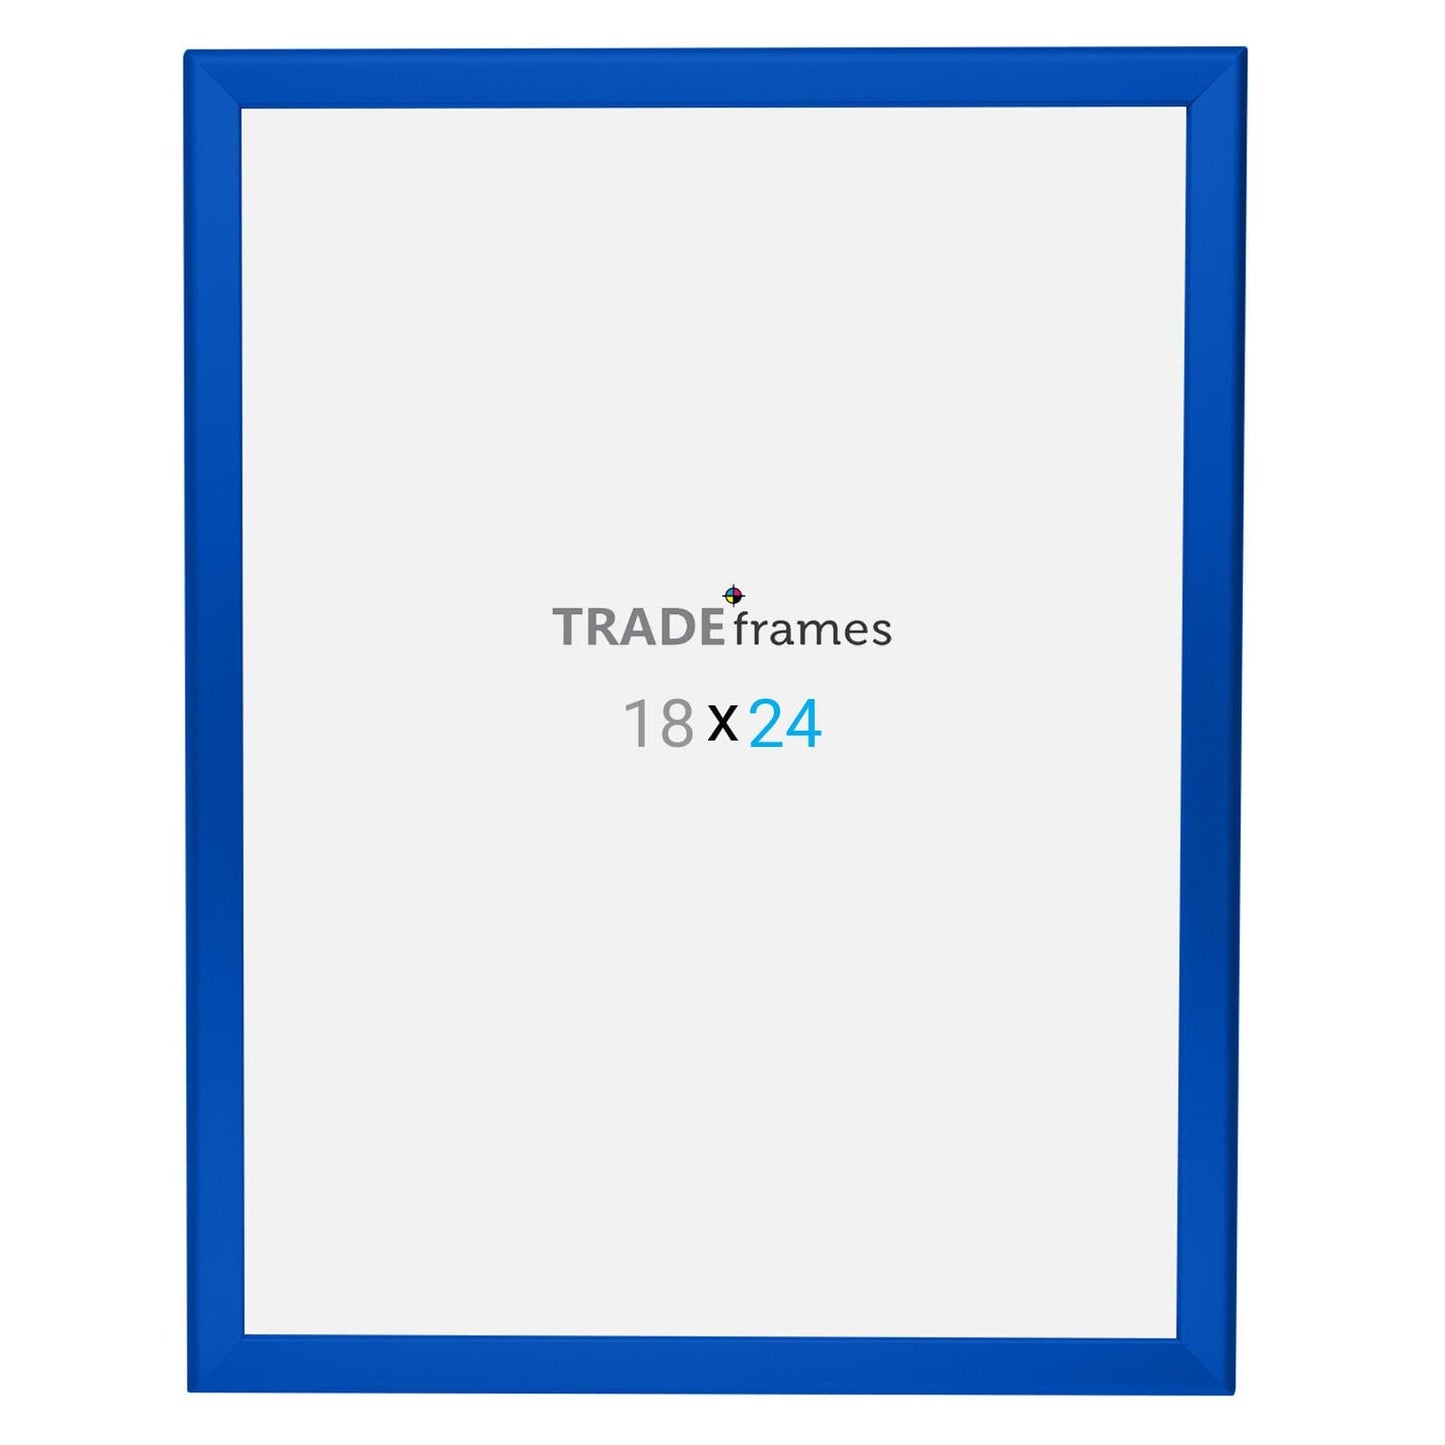 18x24  TRADEframe Blue Snap Frame 18x24 - 1.25 inch profile - Snap Frames Direct